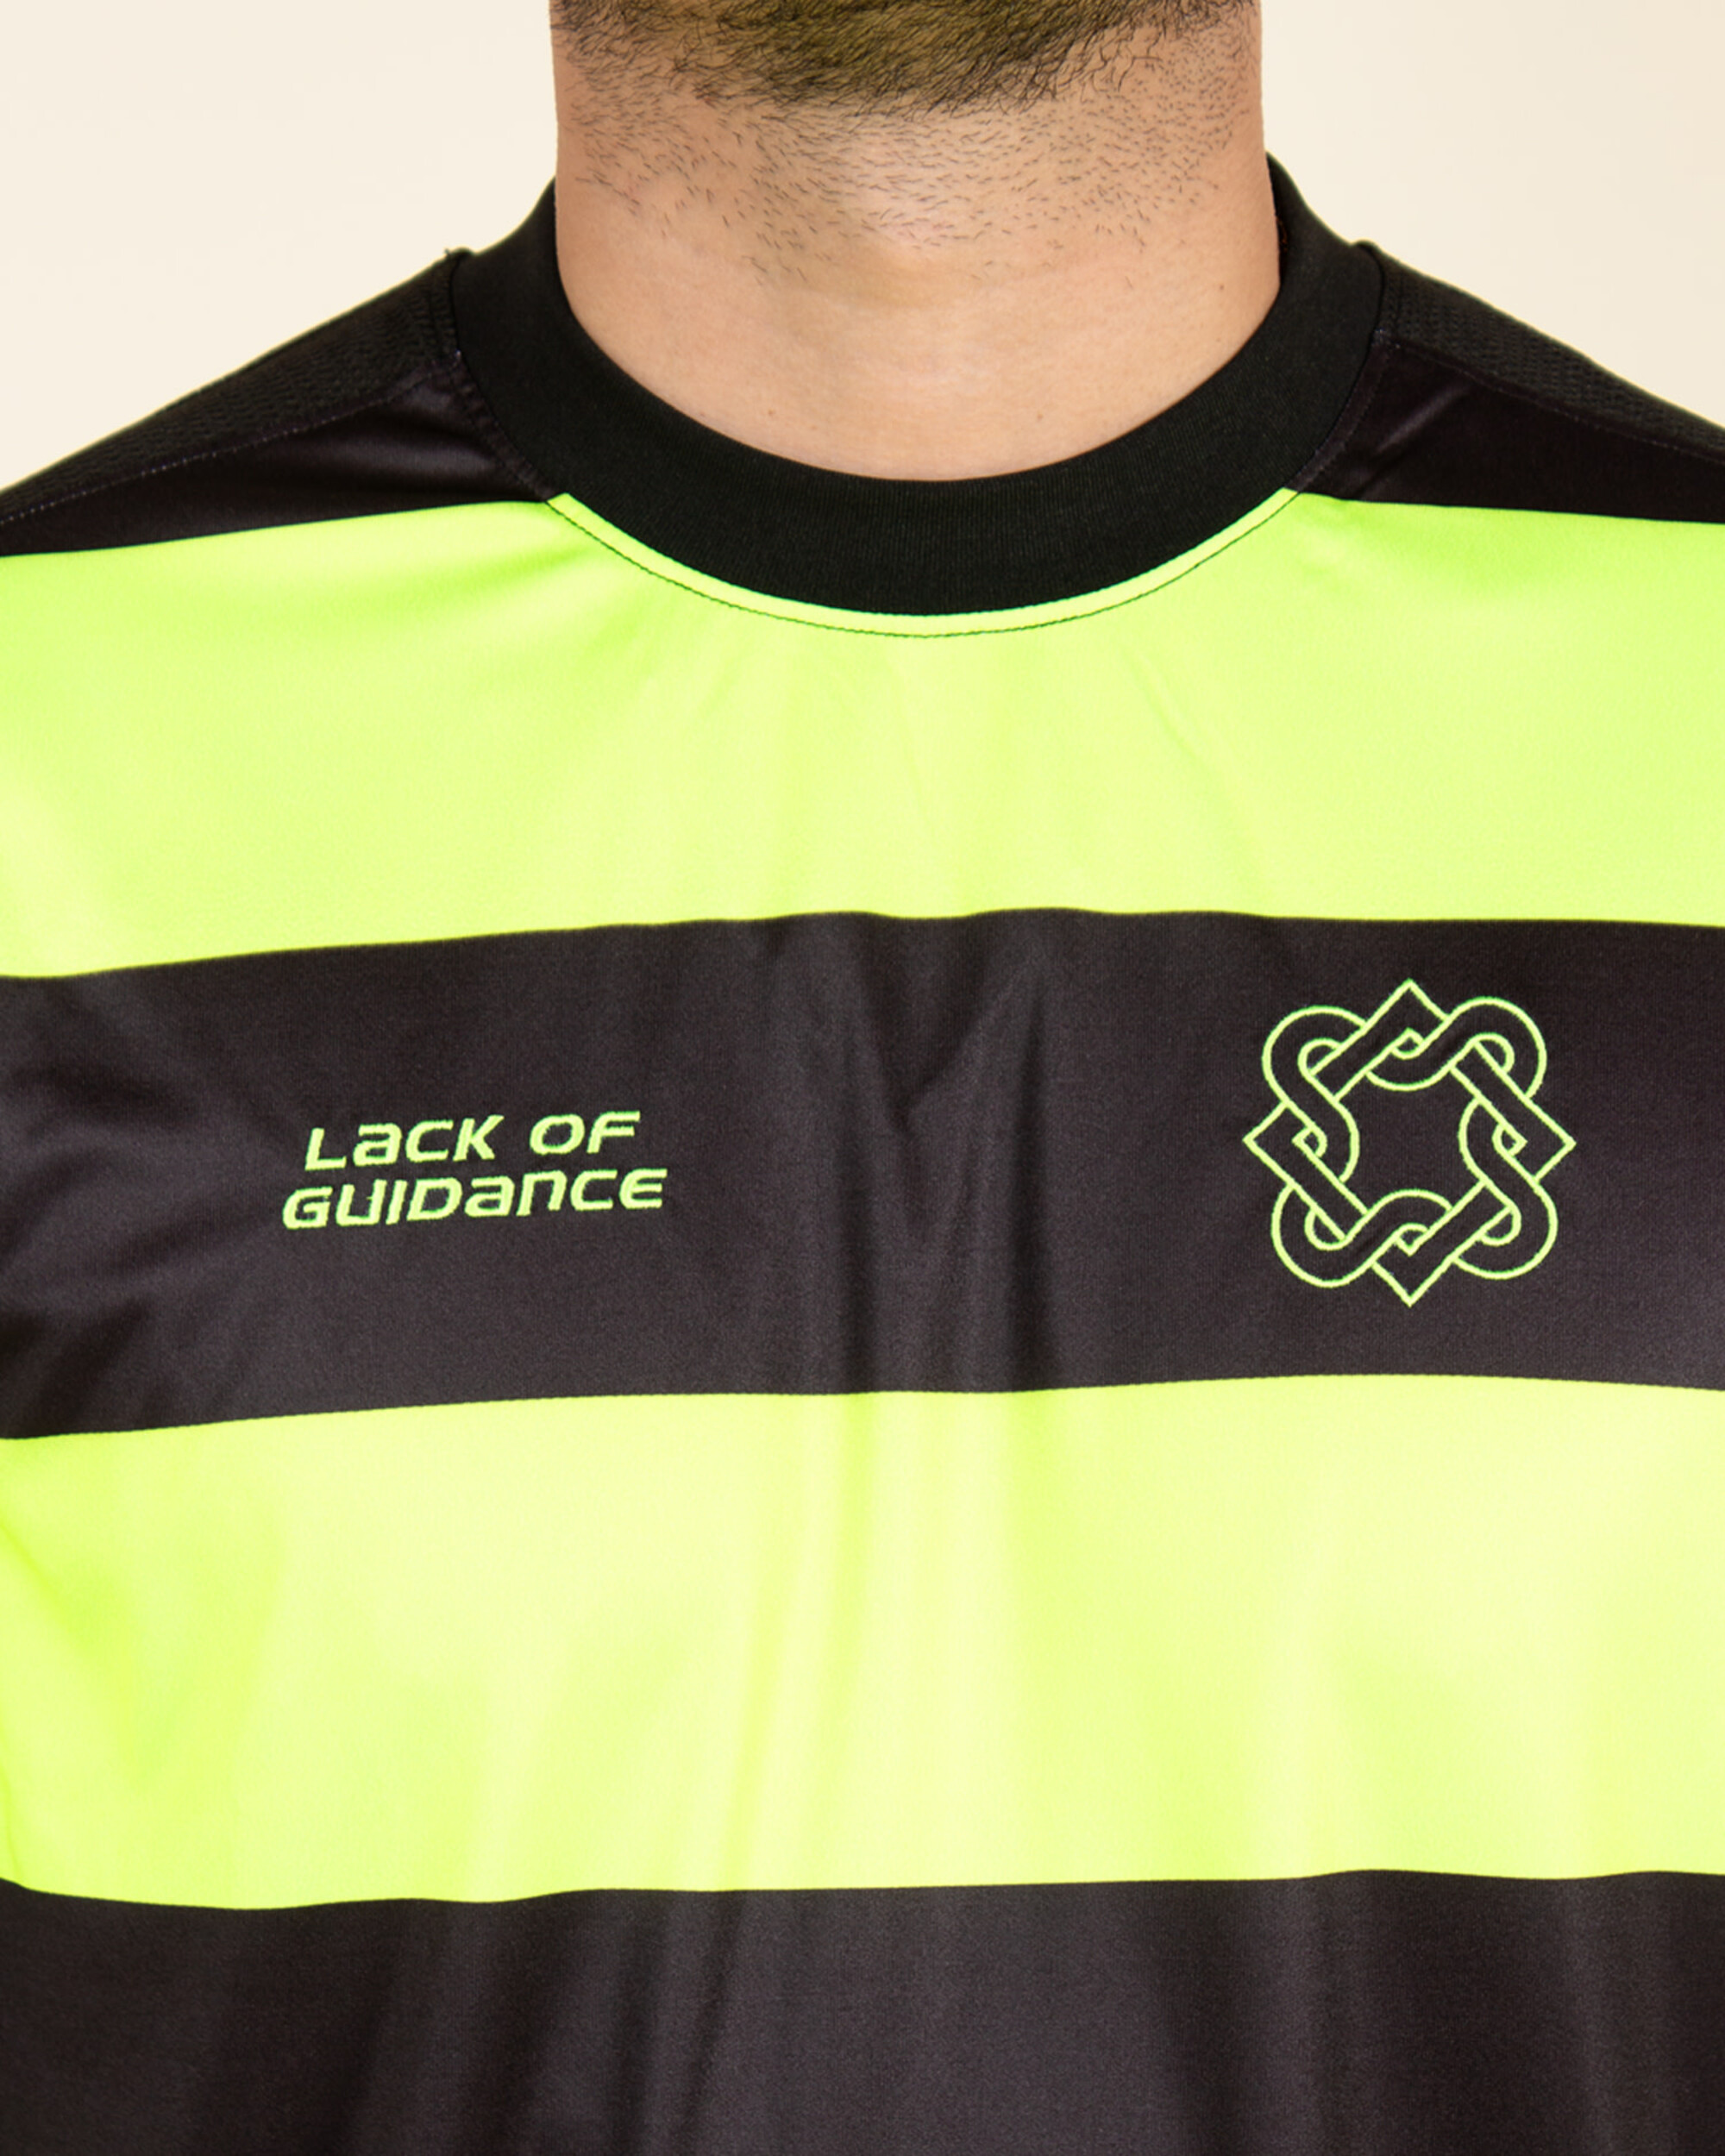 Lack Of Guidance Scott Football Shirt Long-sleeve - Black/Neon Green